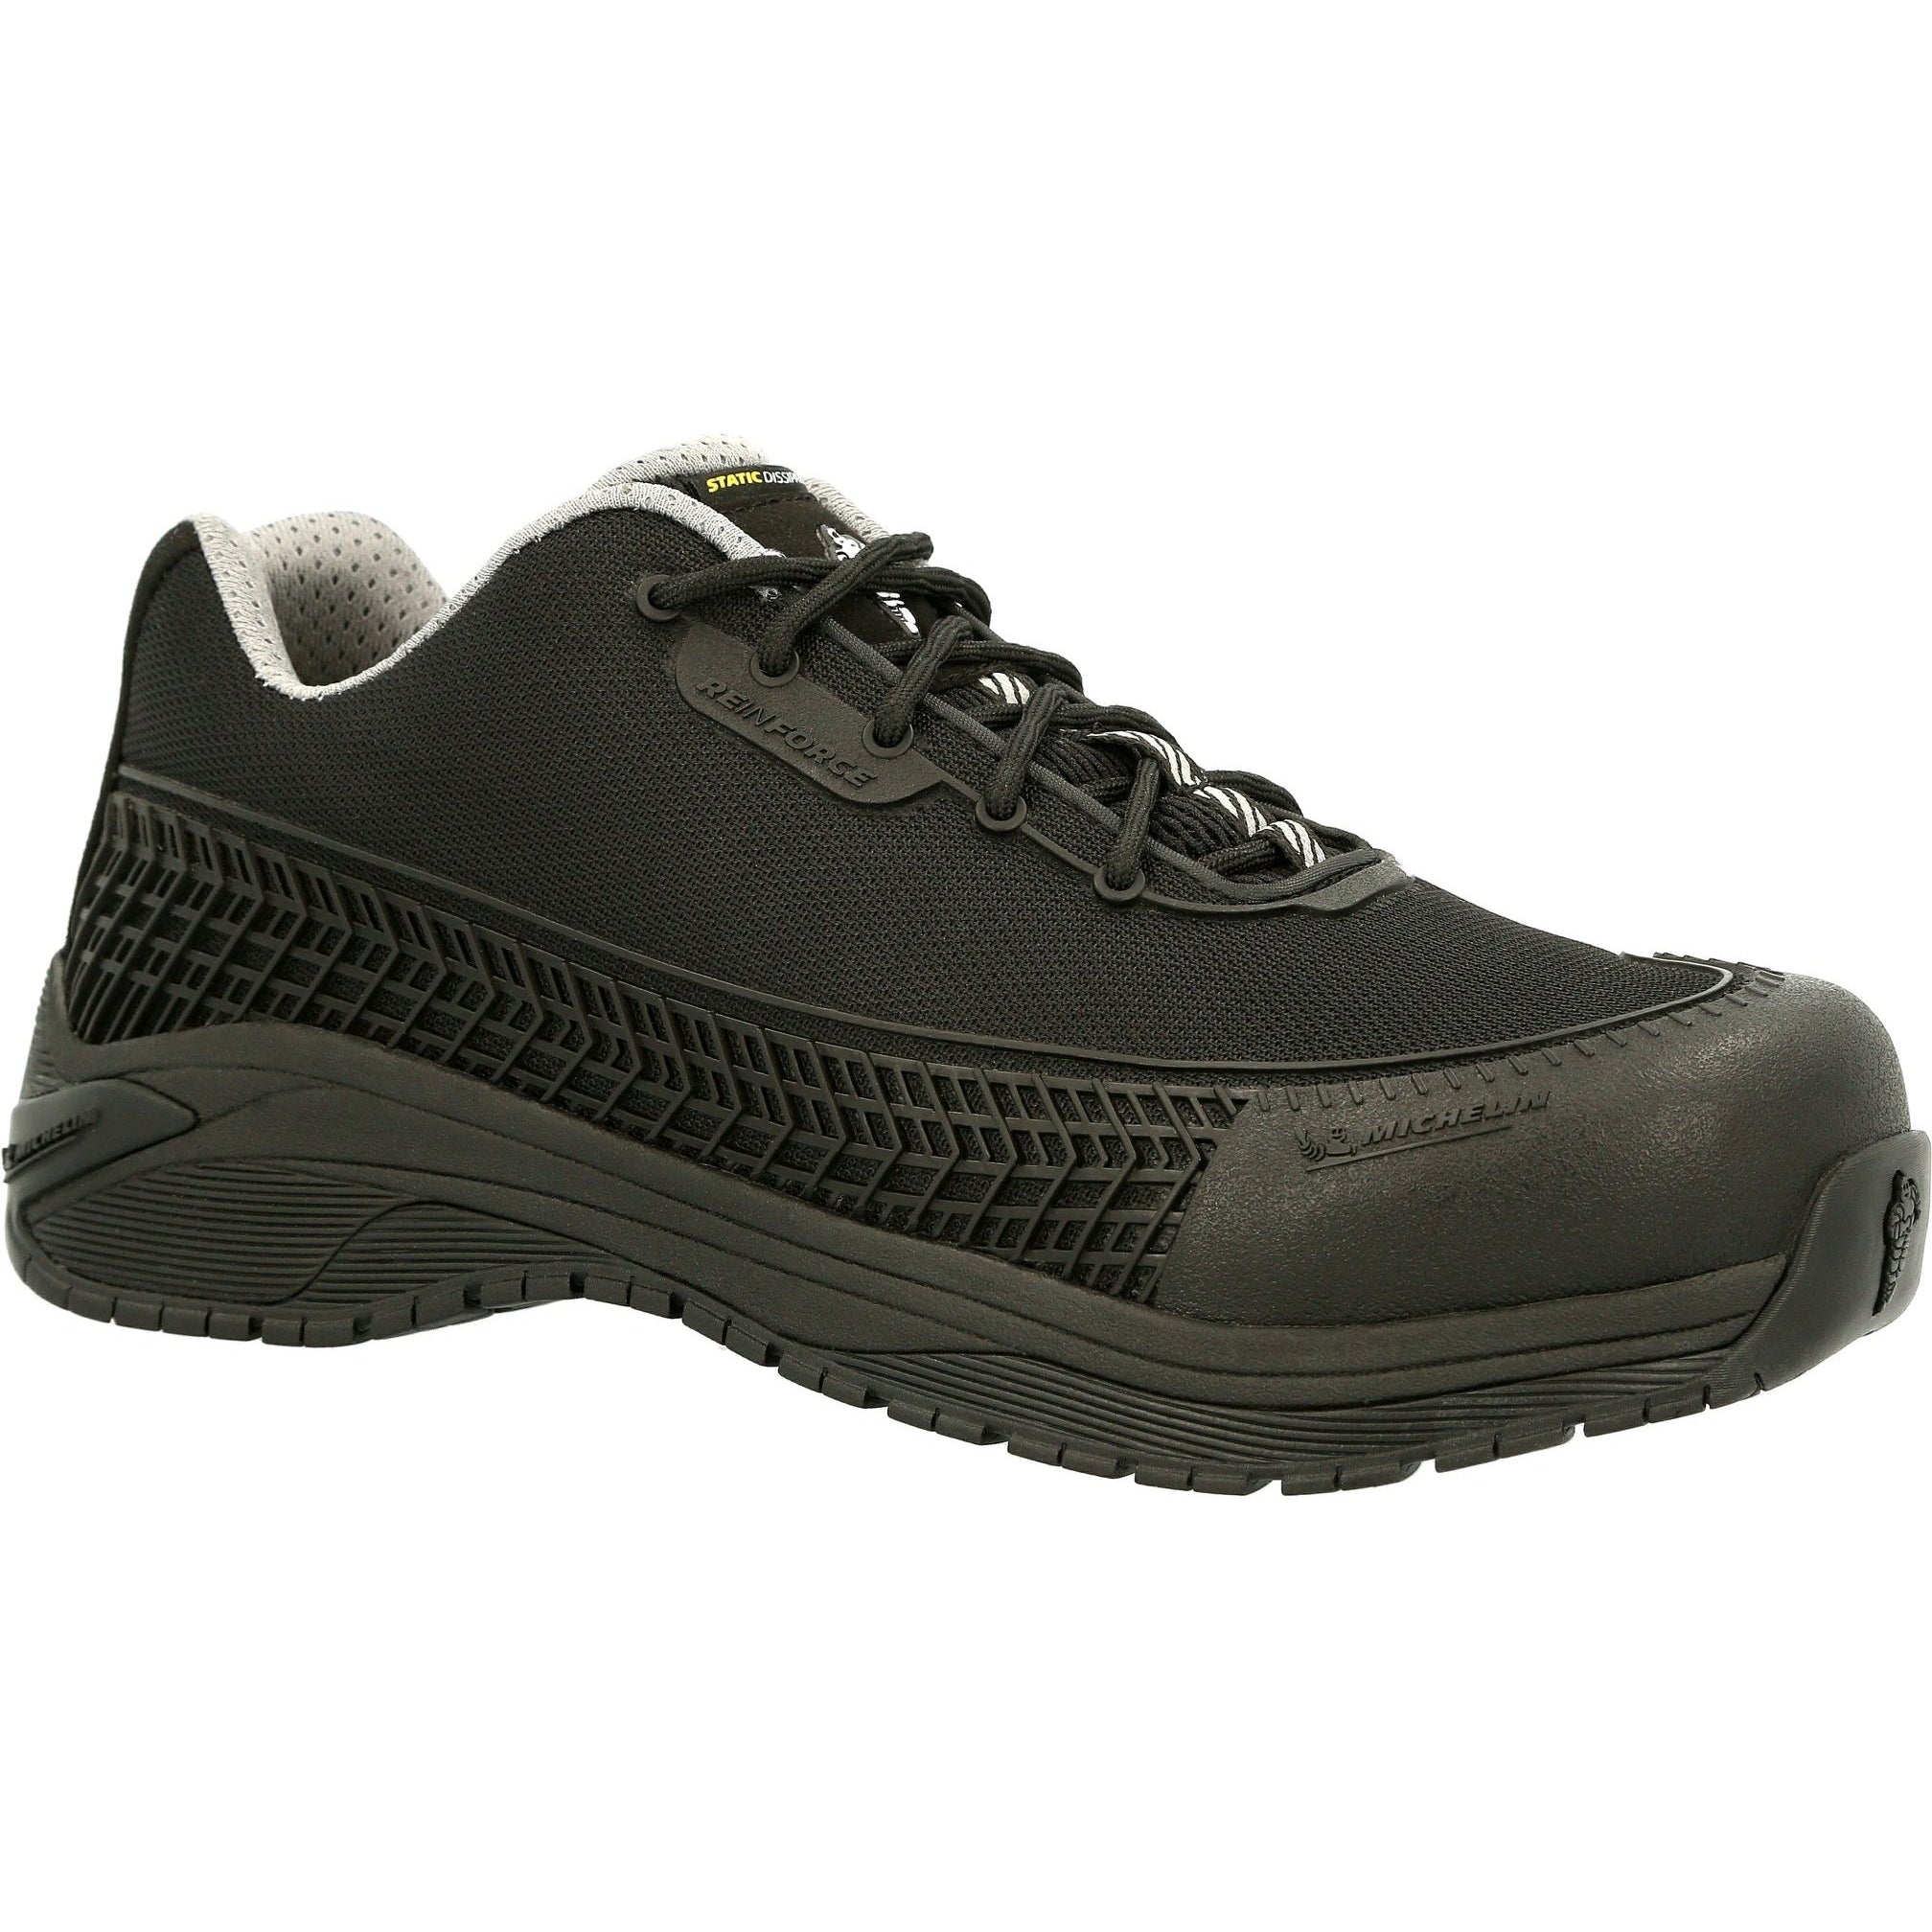 Michelin Men's Latitude Tour Alloy Toe WP Athletic Work Shoe - MIC0002 8 / Medium / Black - Overlook Boots